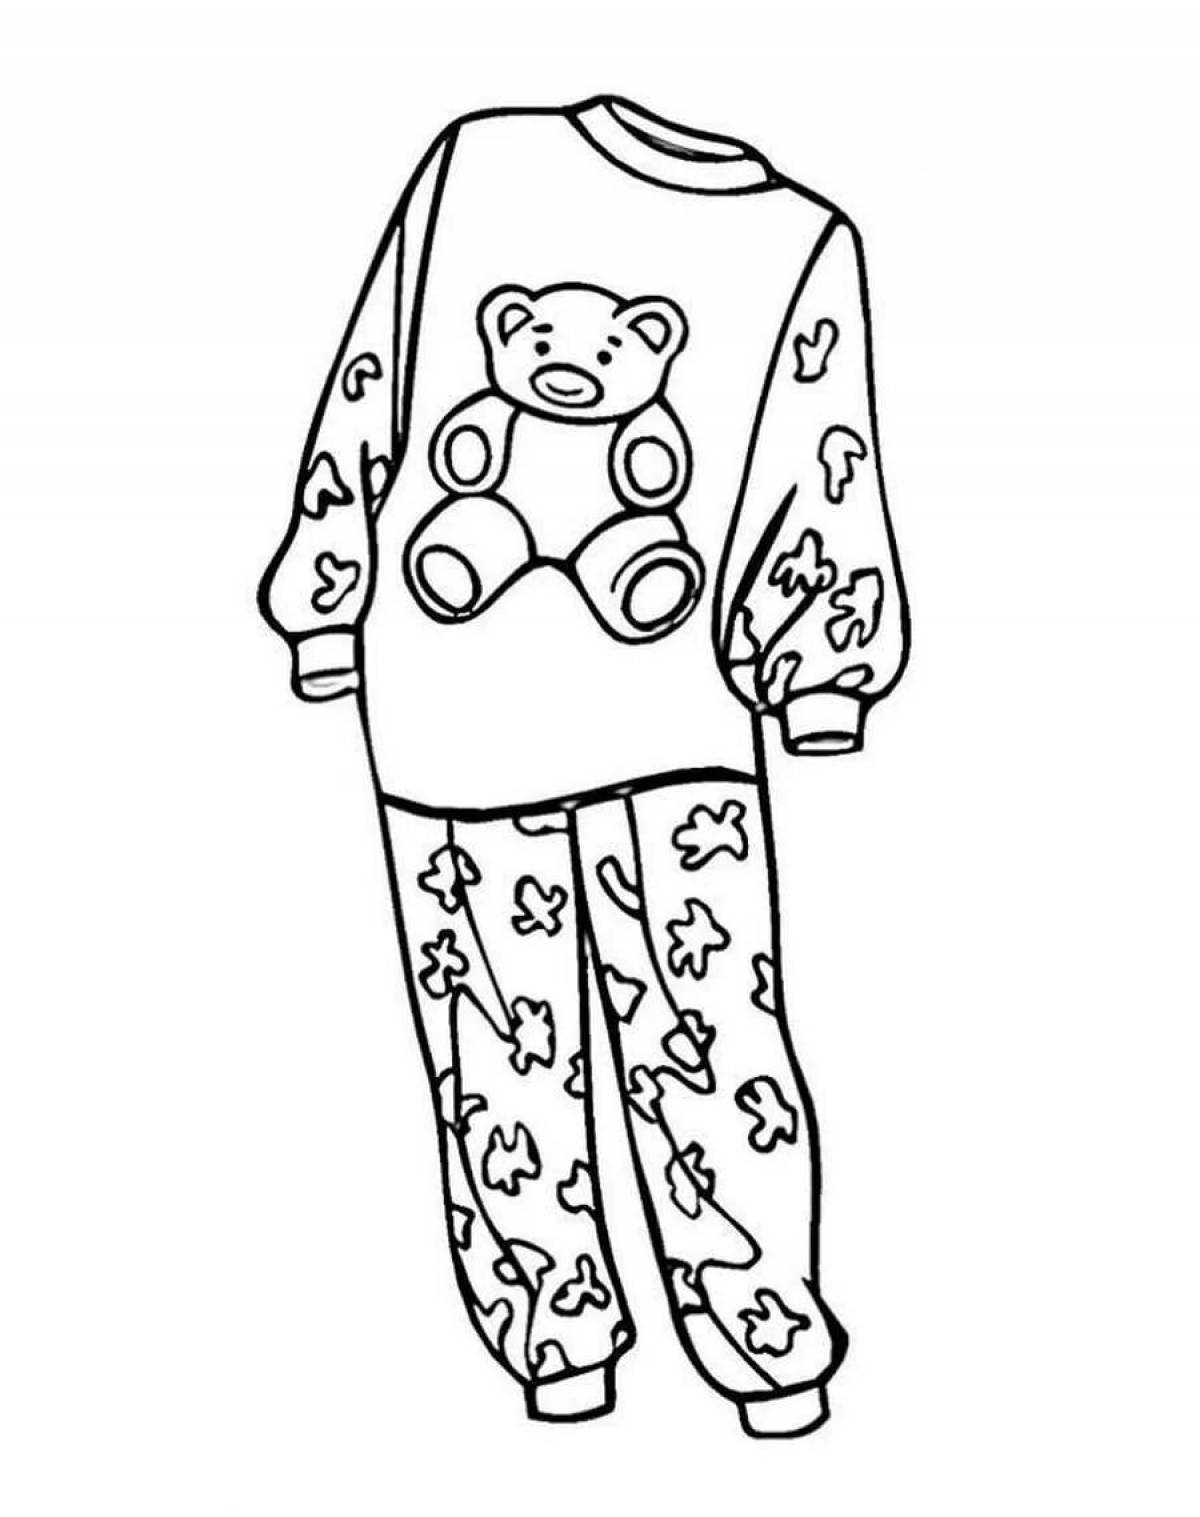 Children's pajamas #2